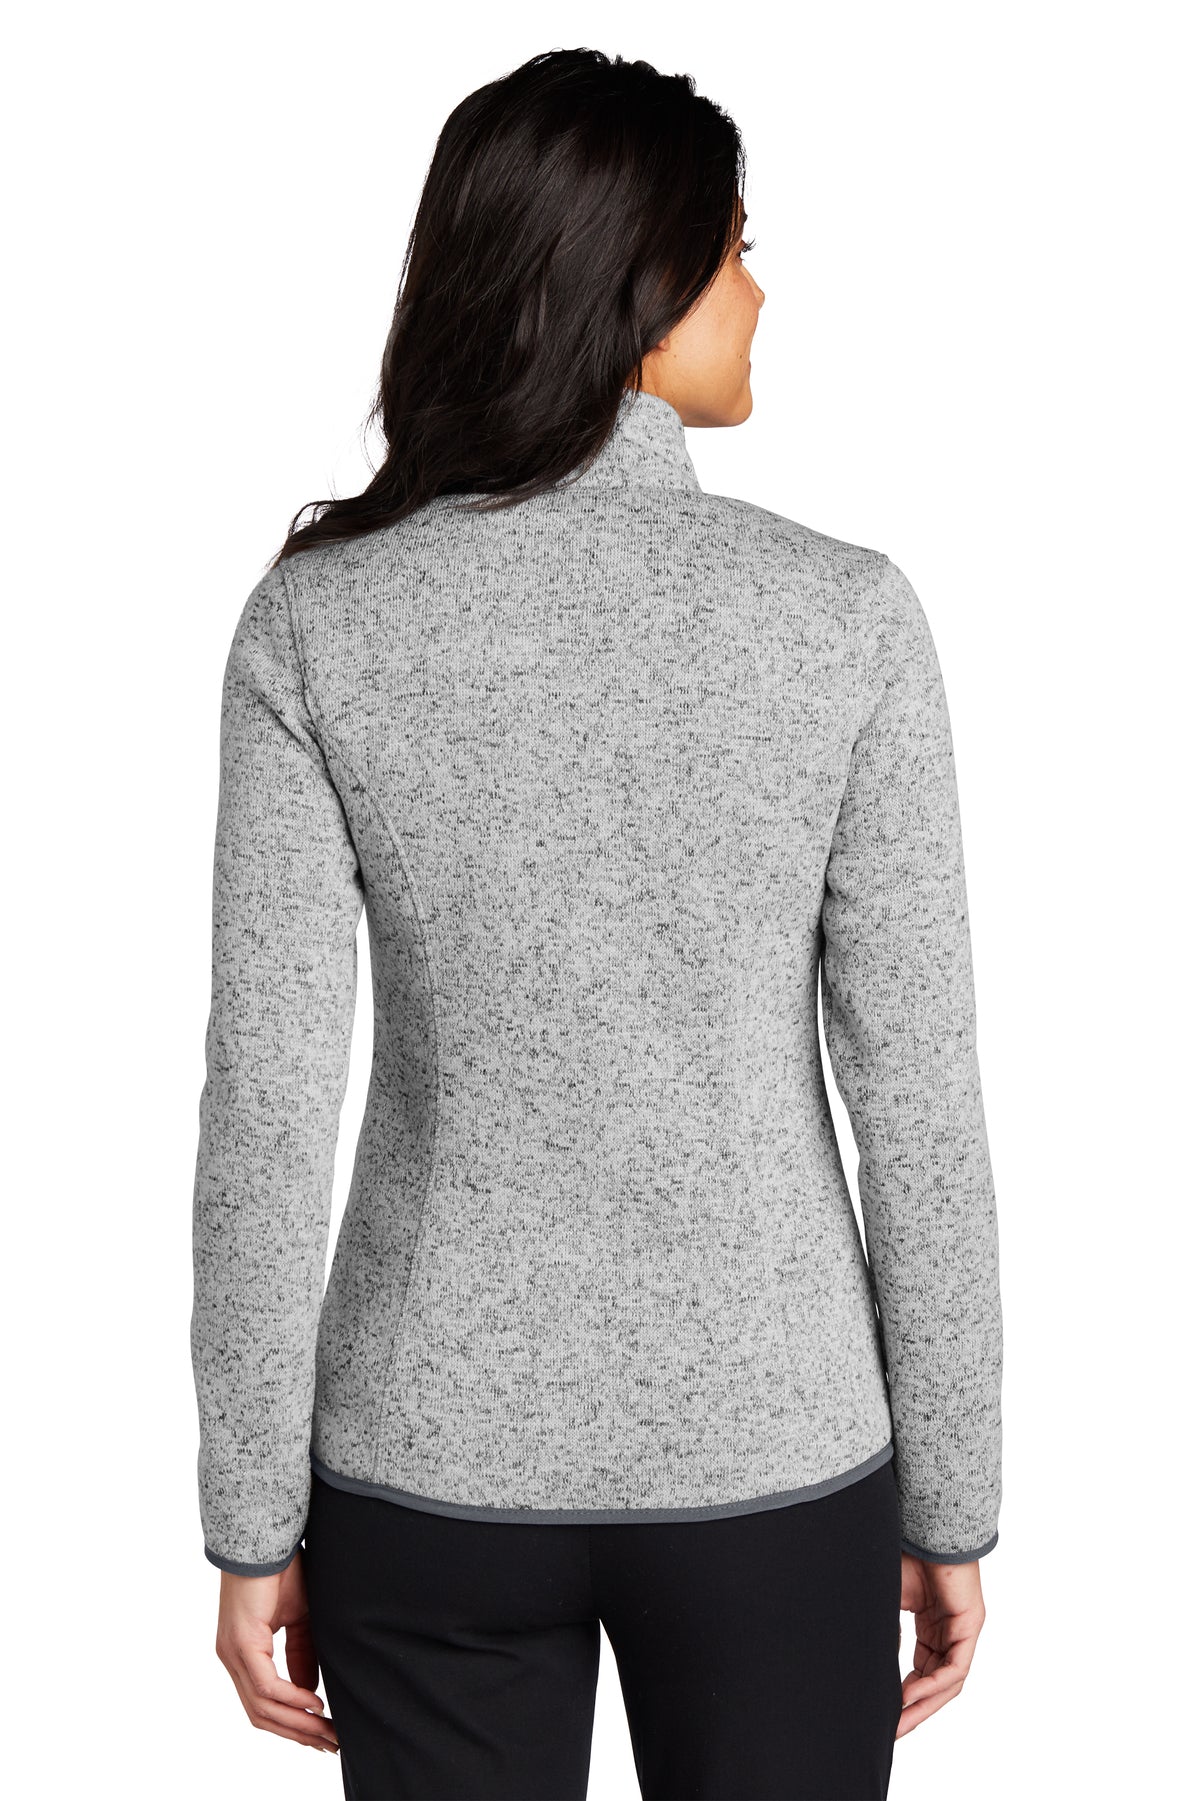 Port Authority Ladies Sweater Fleece Jacket, Product